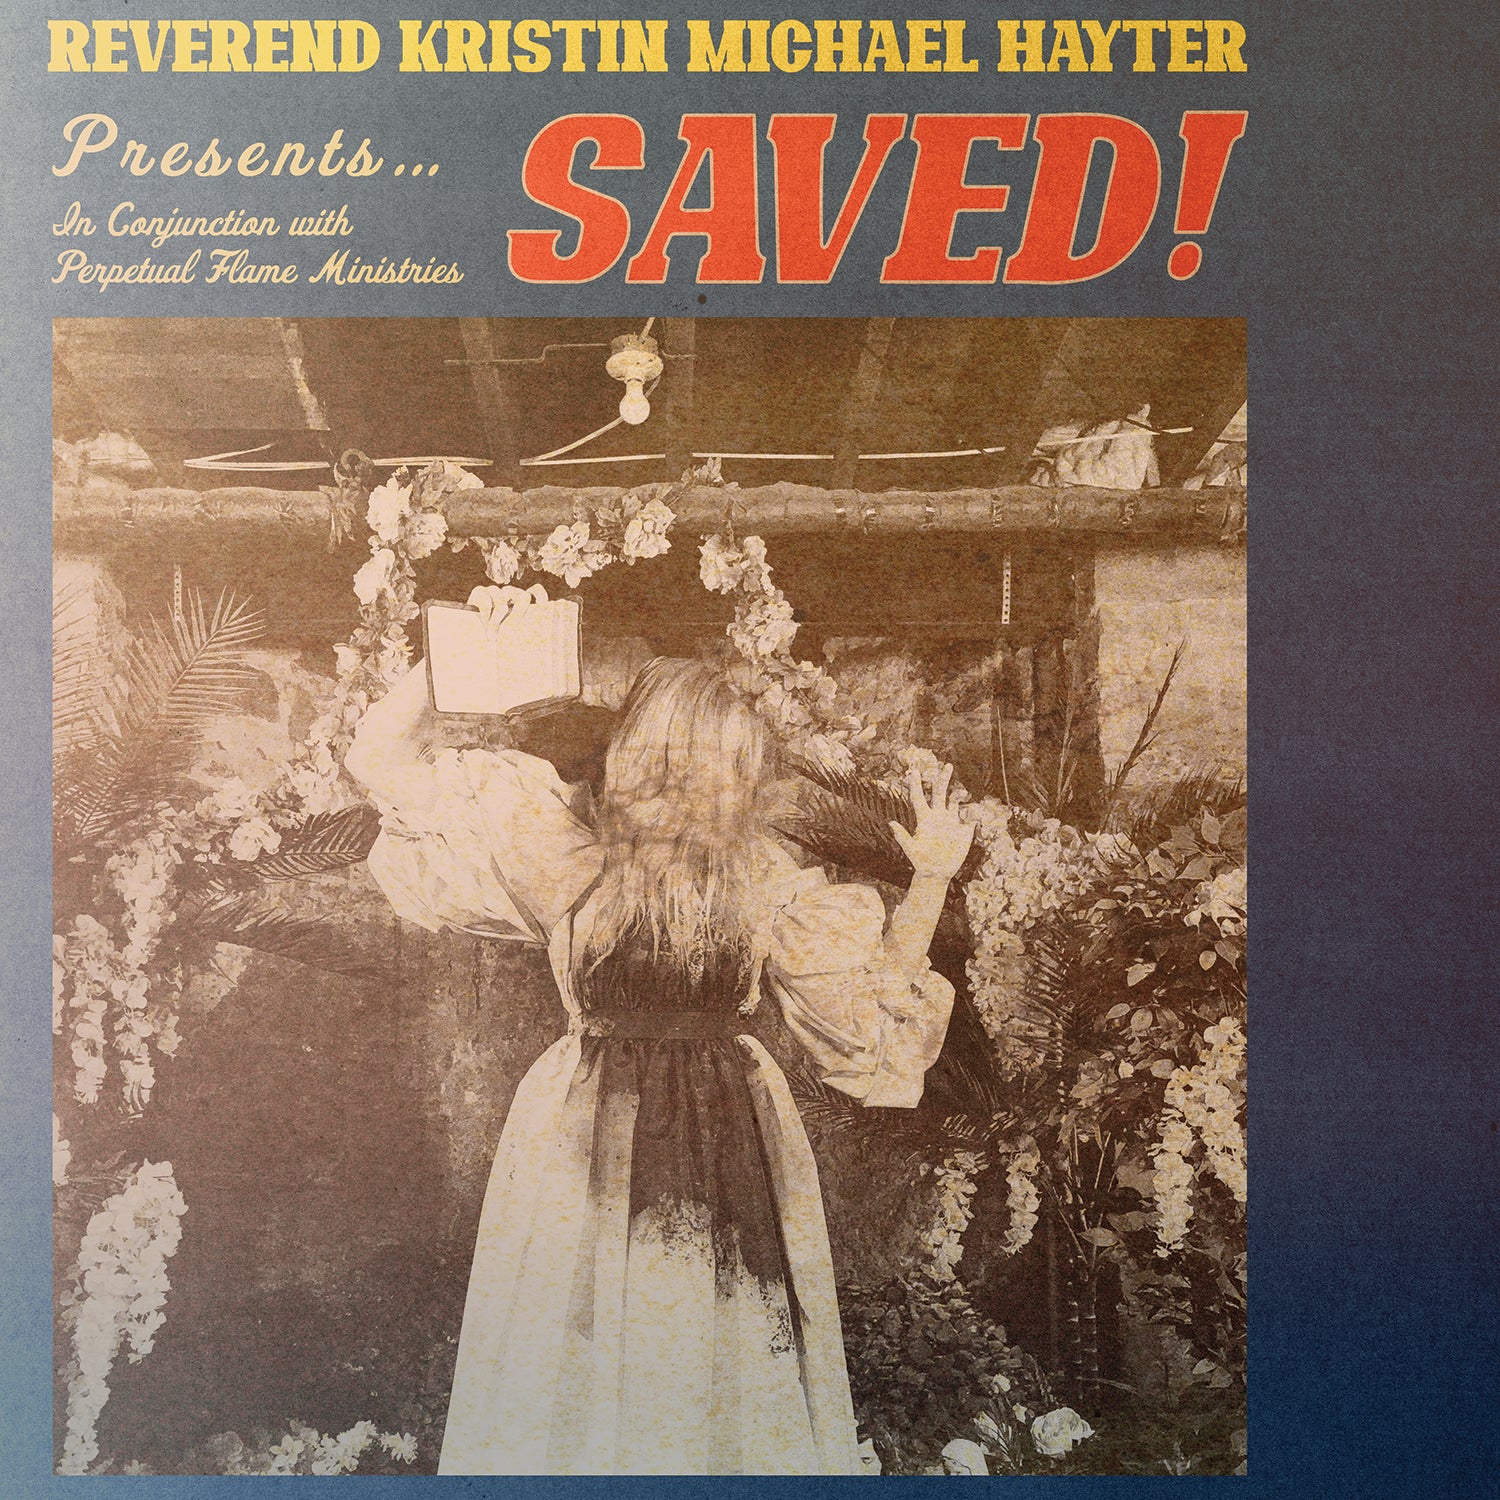 REVEREND KRISTIN MICHAEL HAYTER "Saved!" Tape